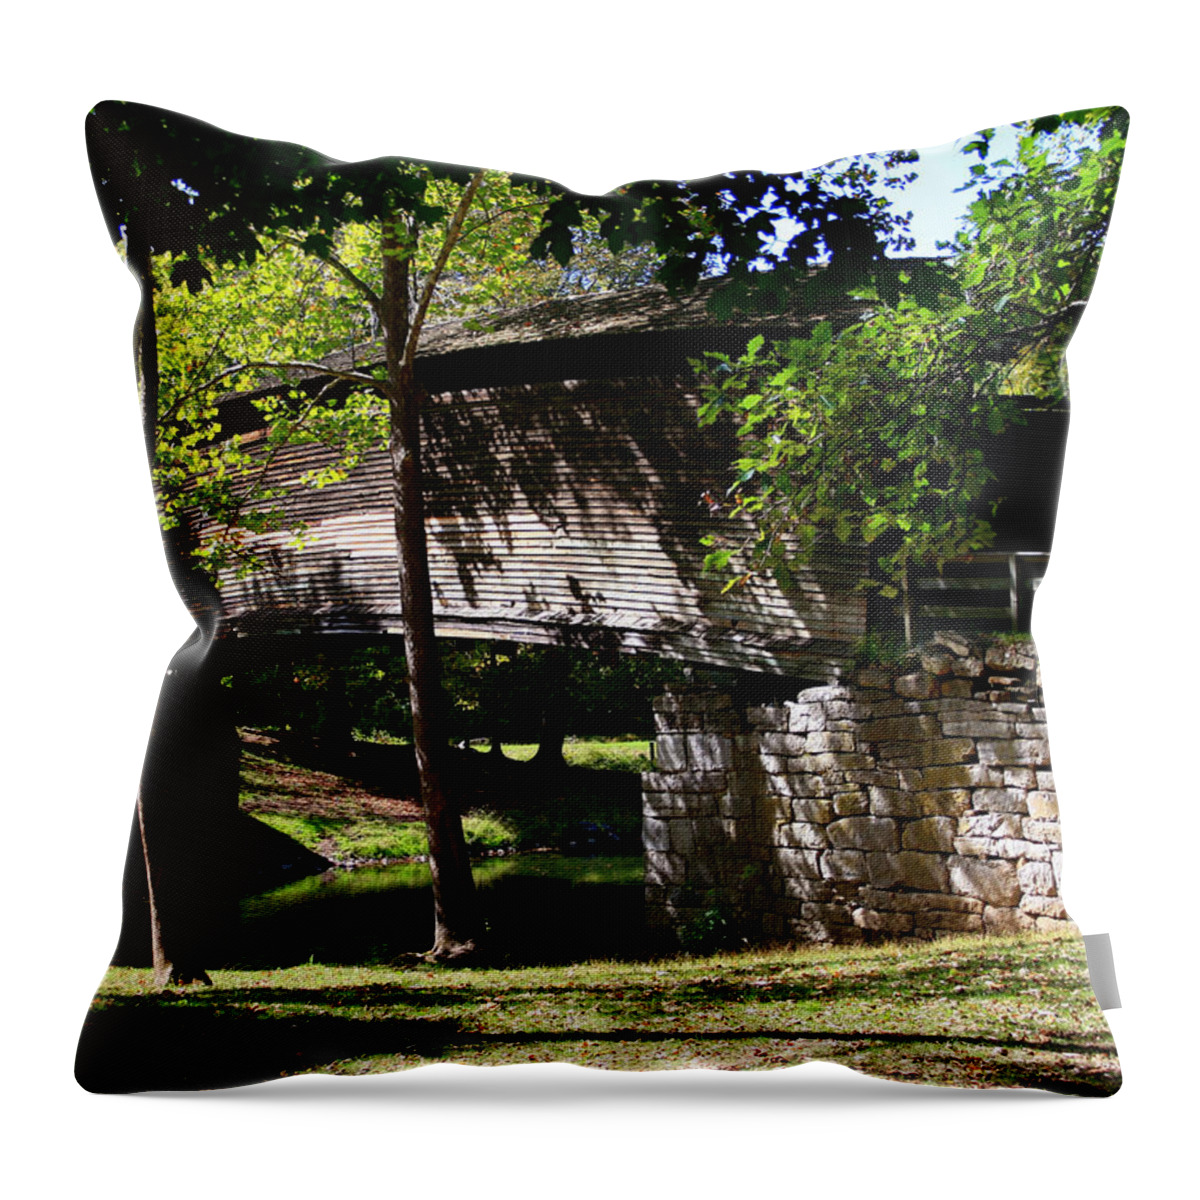 Covered Bridge Throw Pillow featuring the photograph Humpback Bridge by Karen Harrison Brown